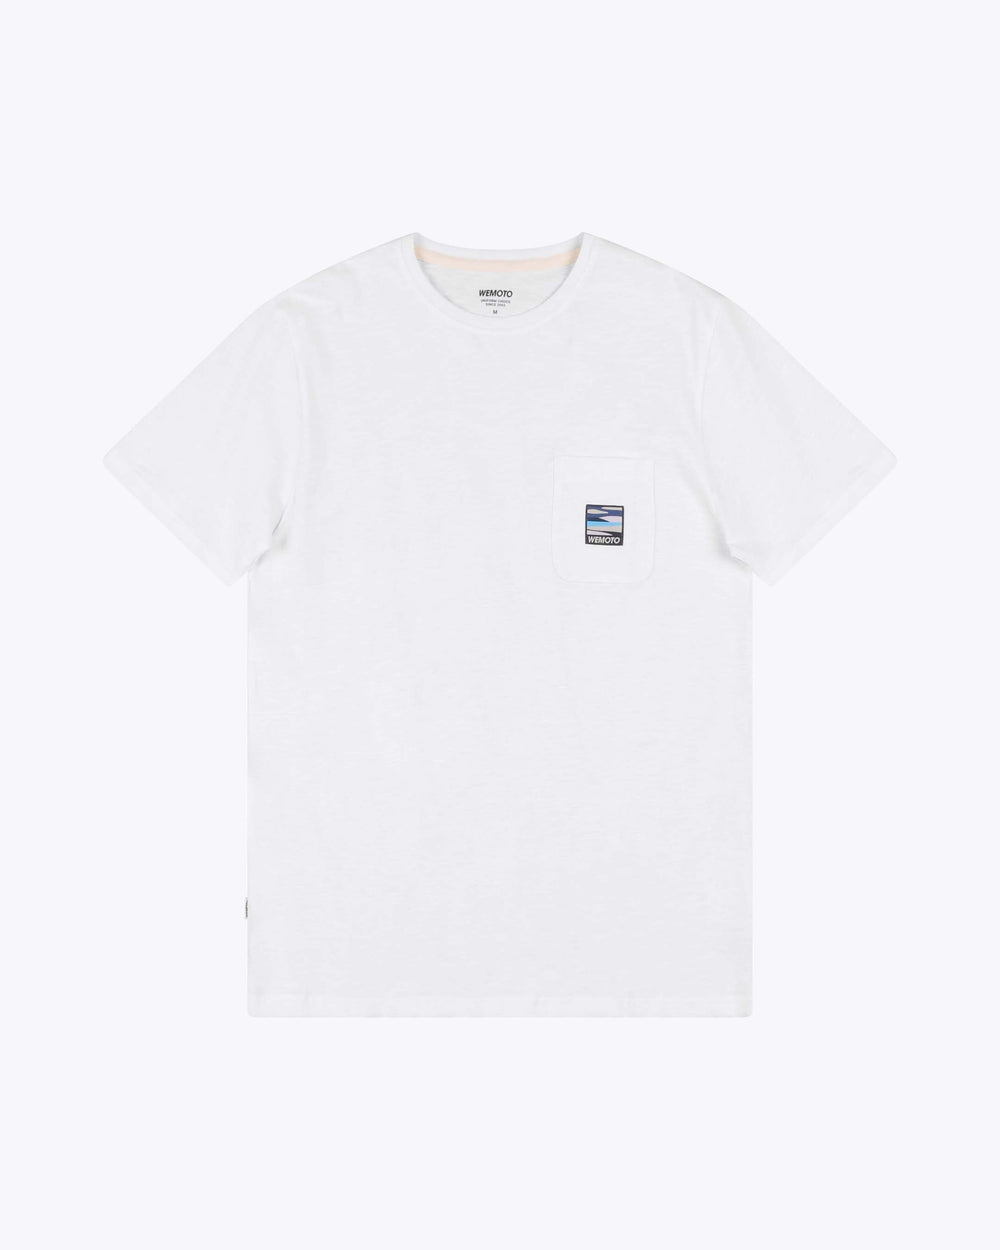 KNIGHT Off White Slub Jersey Pocket T-Shirt